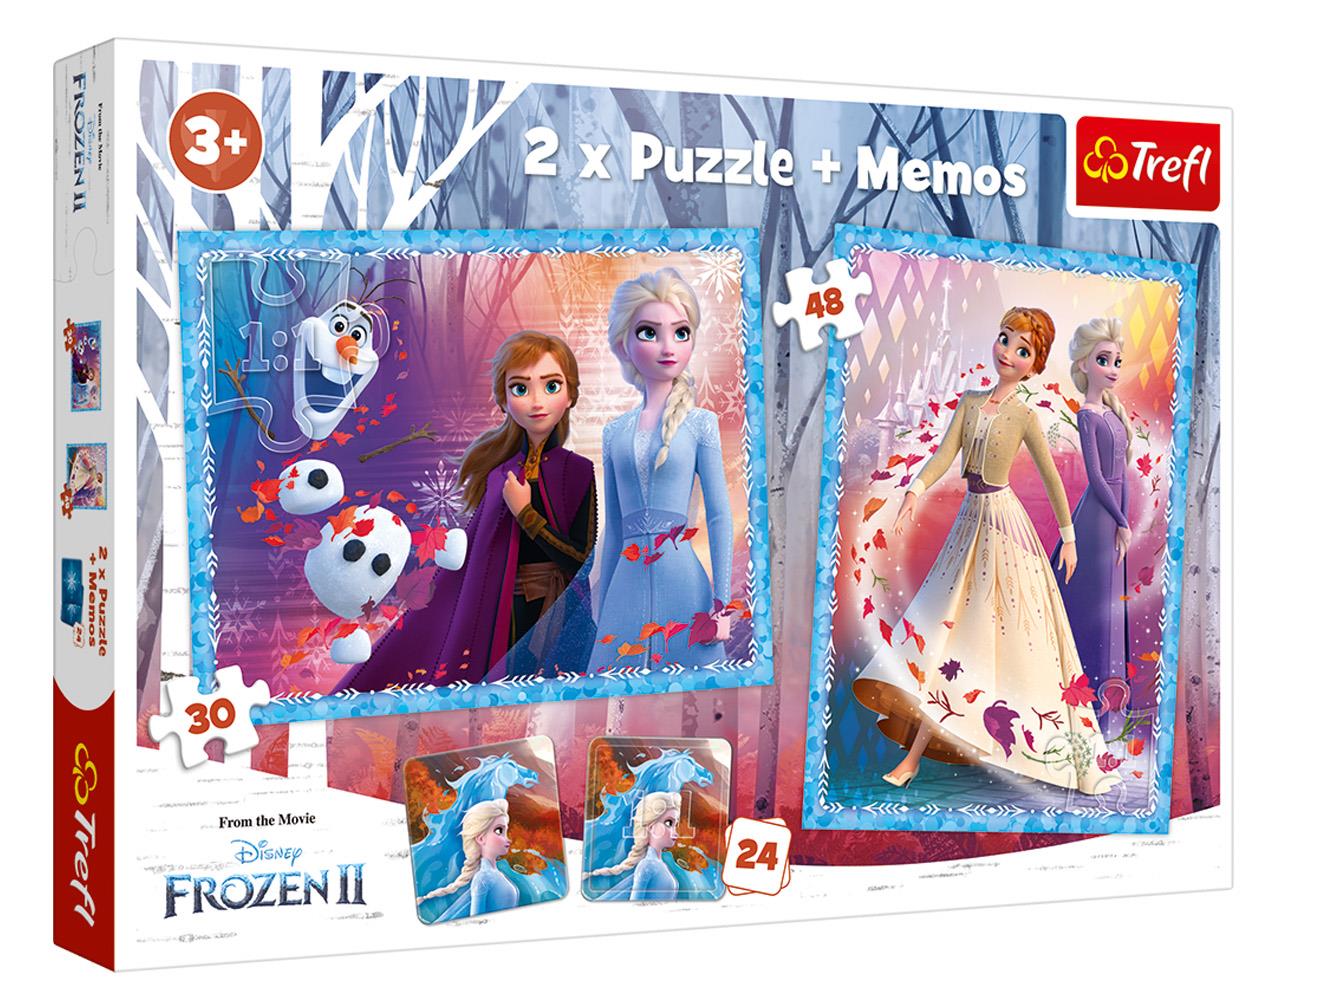 Trefl Çocuk Puzzle 90604 Mickey Fun With Friends, Disney 2 in 1 + Memos Puzzle